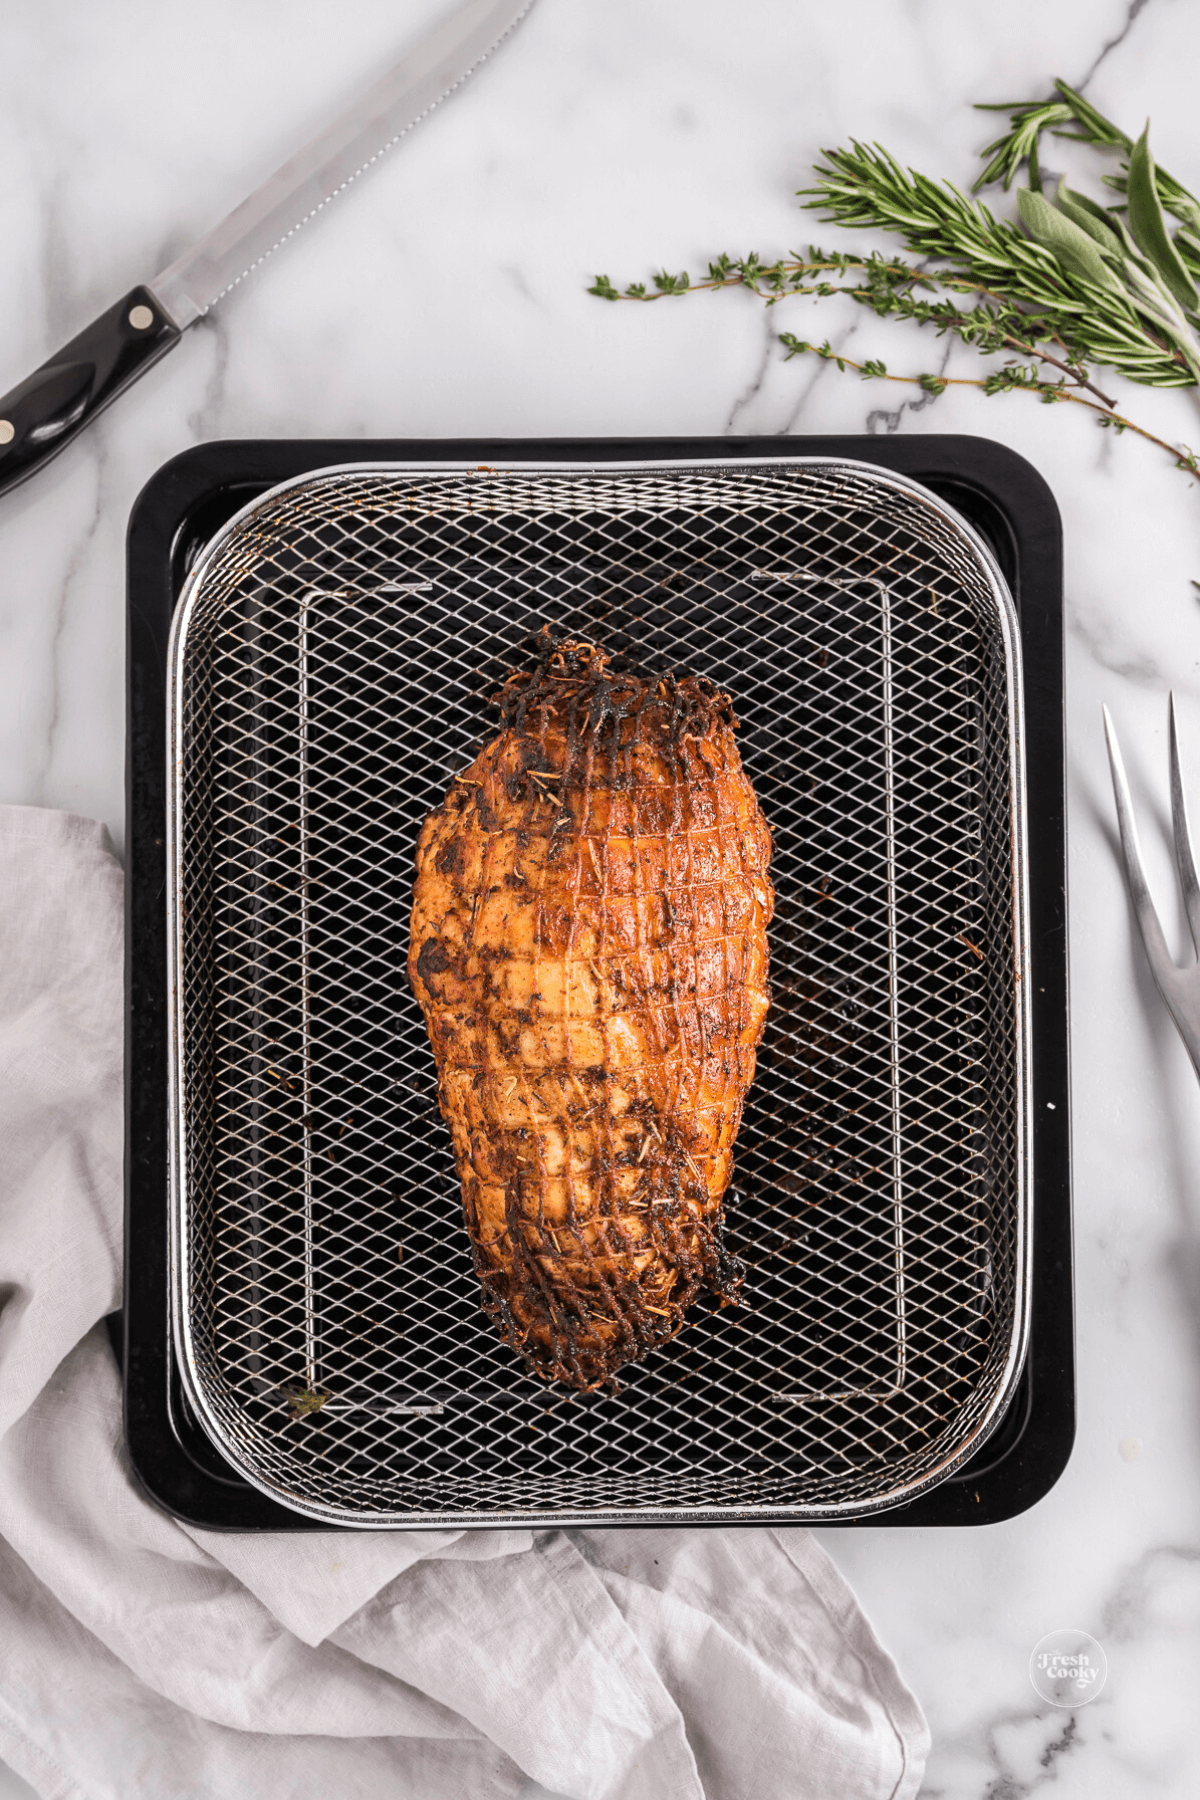 Finished air fryer roasted turkey breast on air fryer basket.